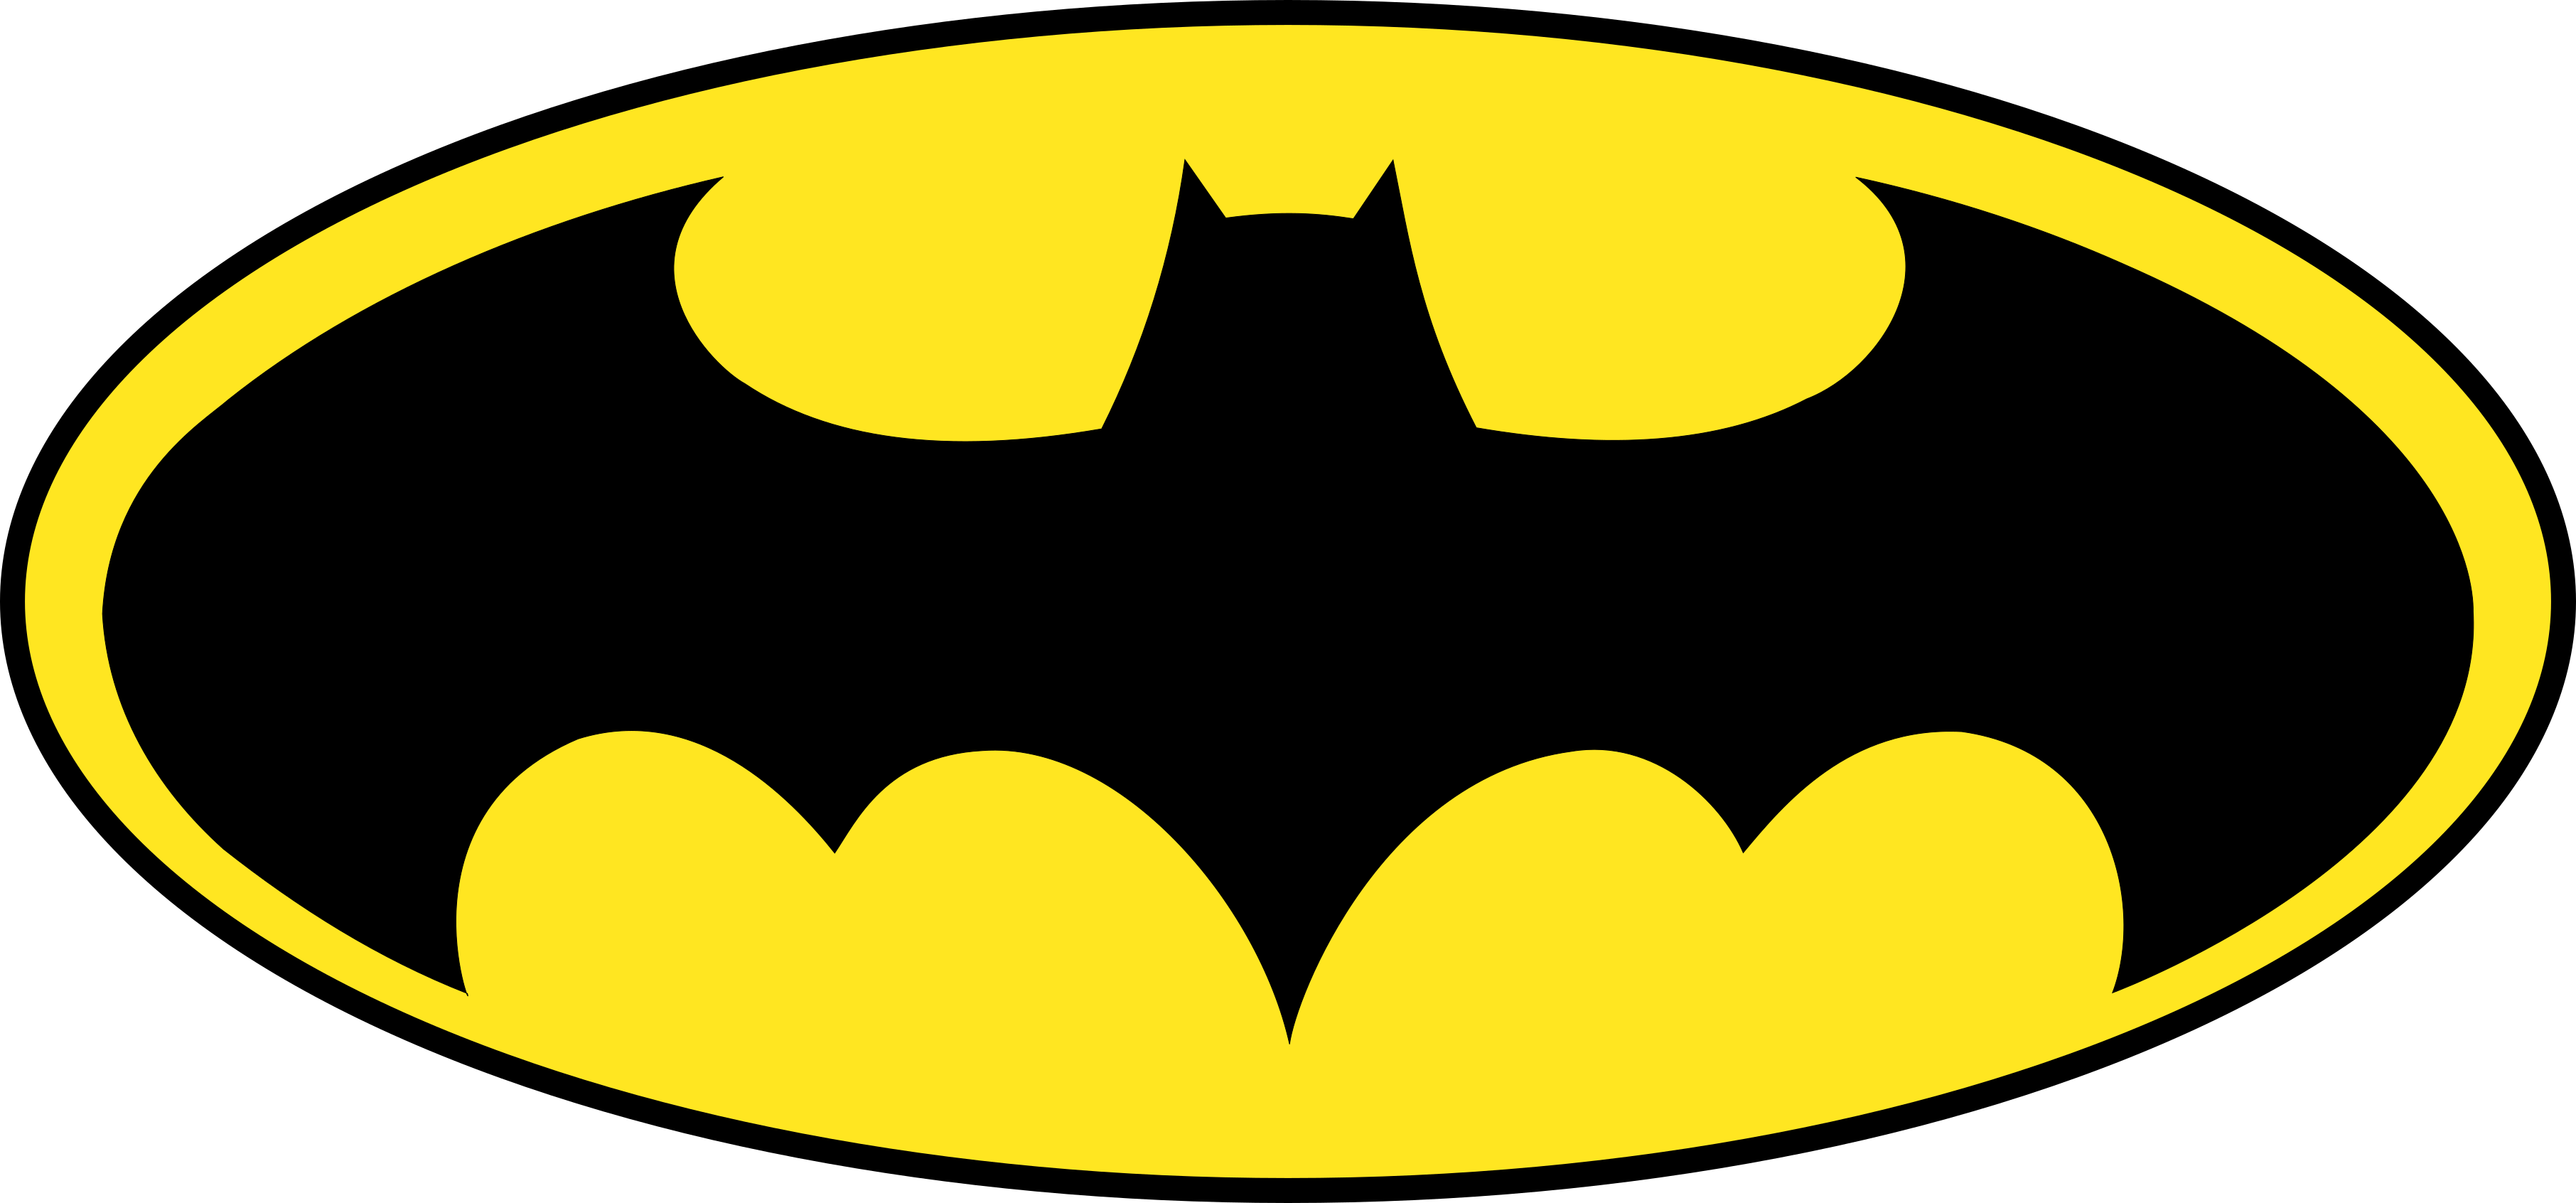 Batman Logo PNG Image PurePNG Free transparent CC0 PNG Image Library